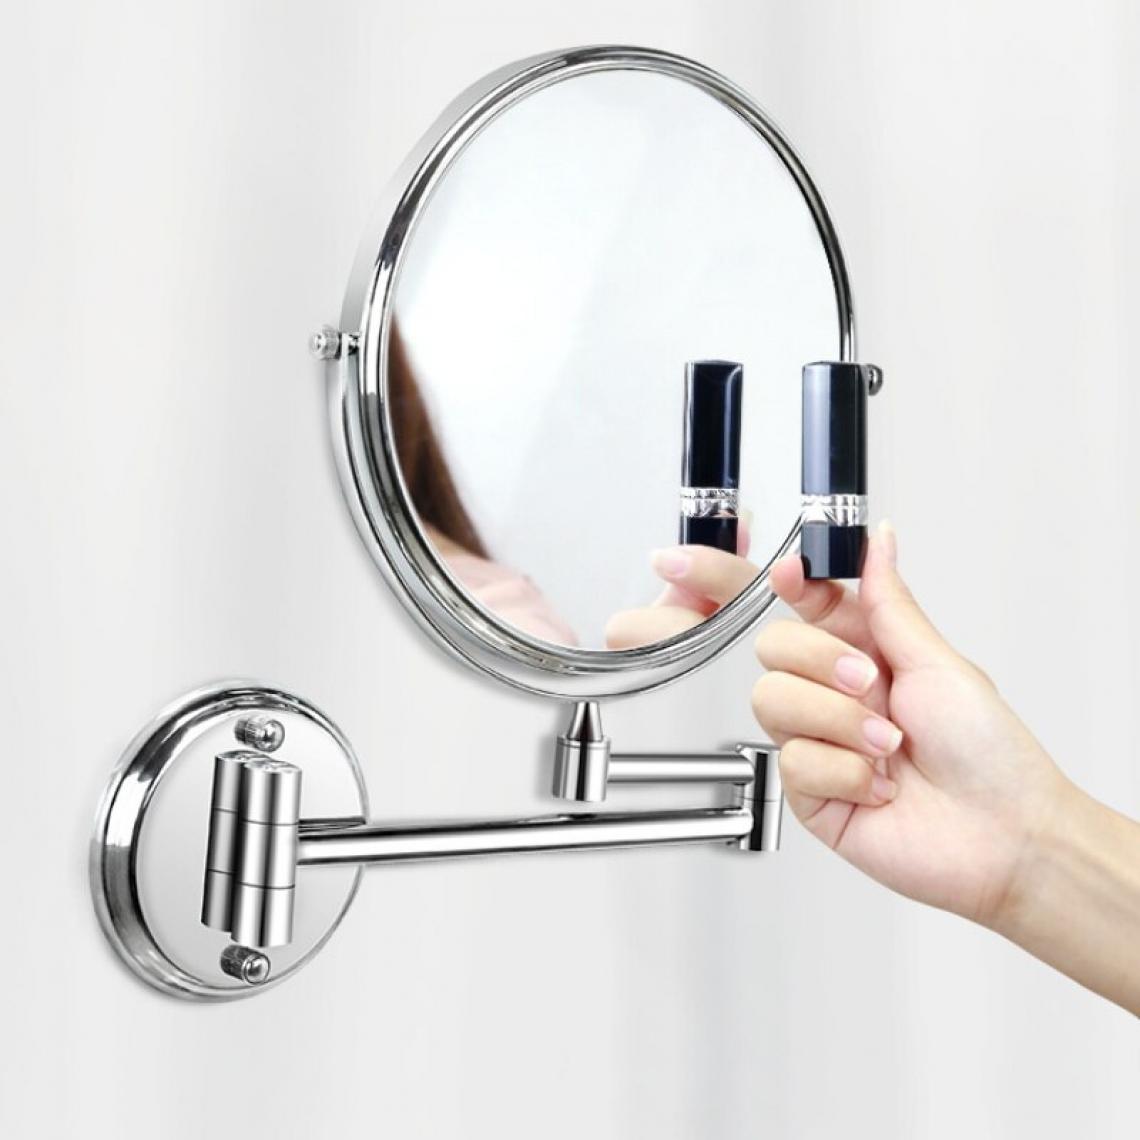 Universal - Miroir de toilette, mur de salle de bains, loupe pliante, miroir de salle de bains.(Argent) - Miroir de salle de bain